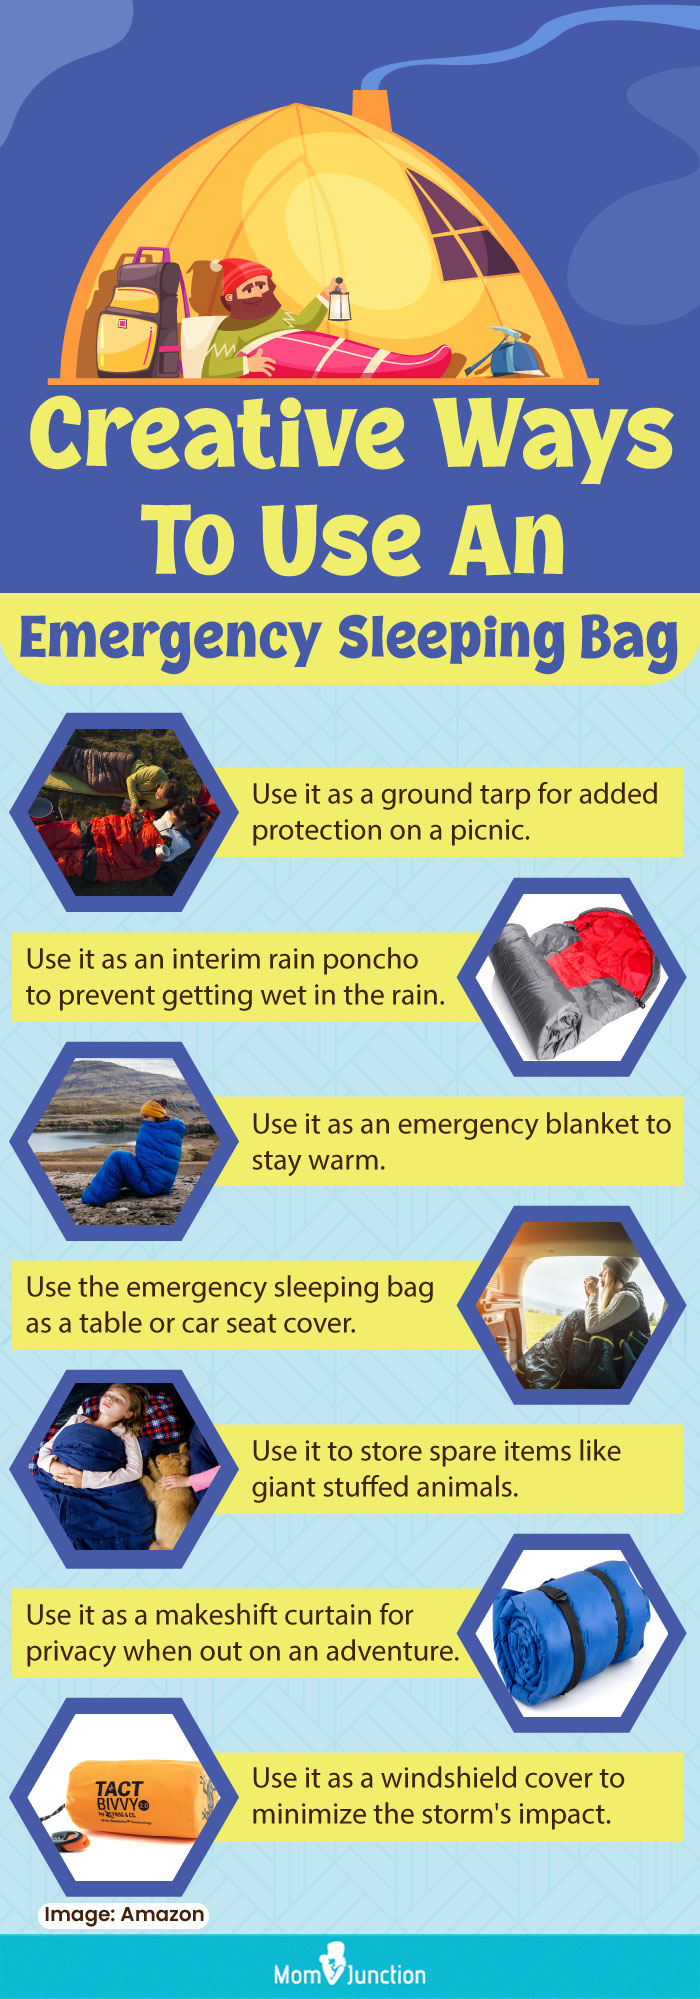 Creative Ways To Use An Emergency Sleeping Bag (infographic)